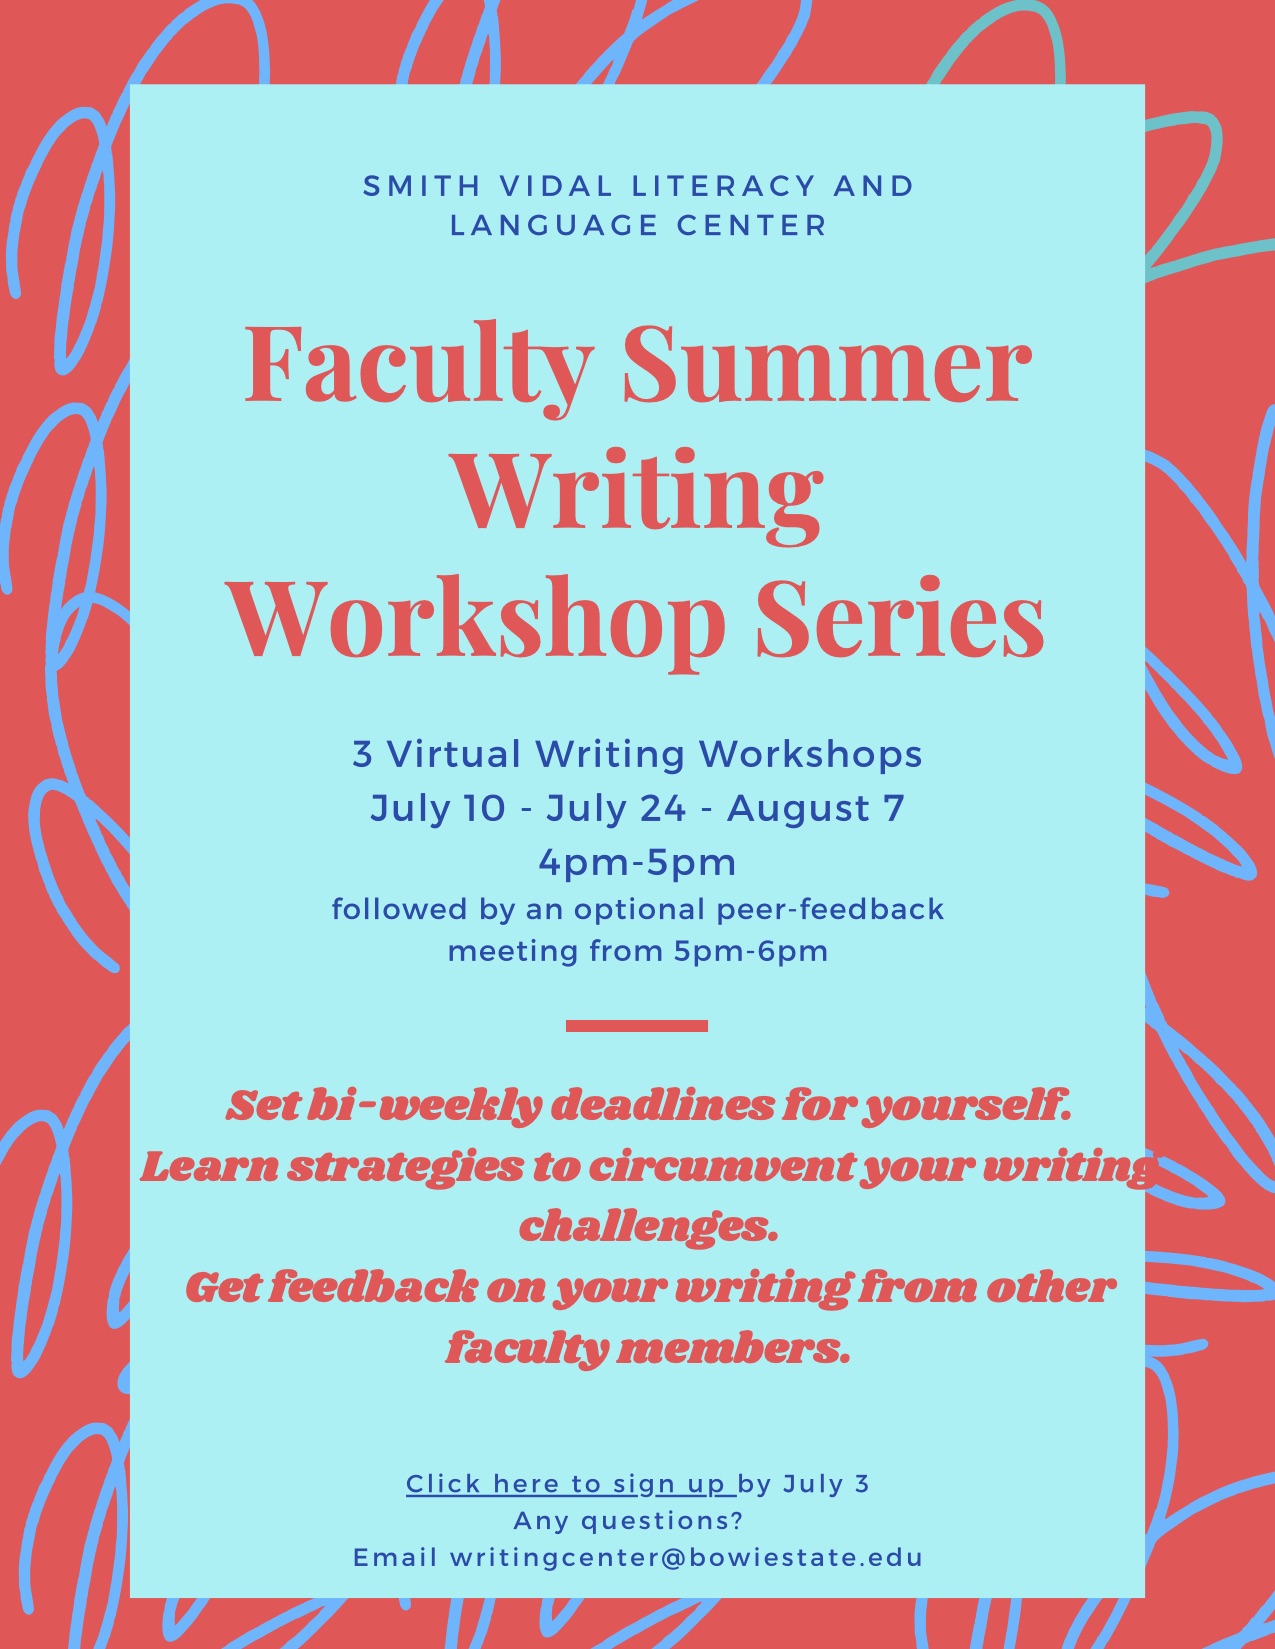 Faculty Summer Writing Workshop Series Flyer